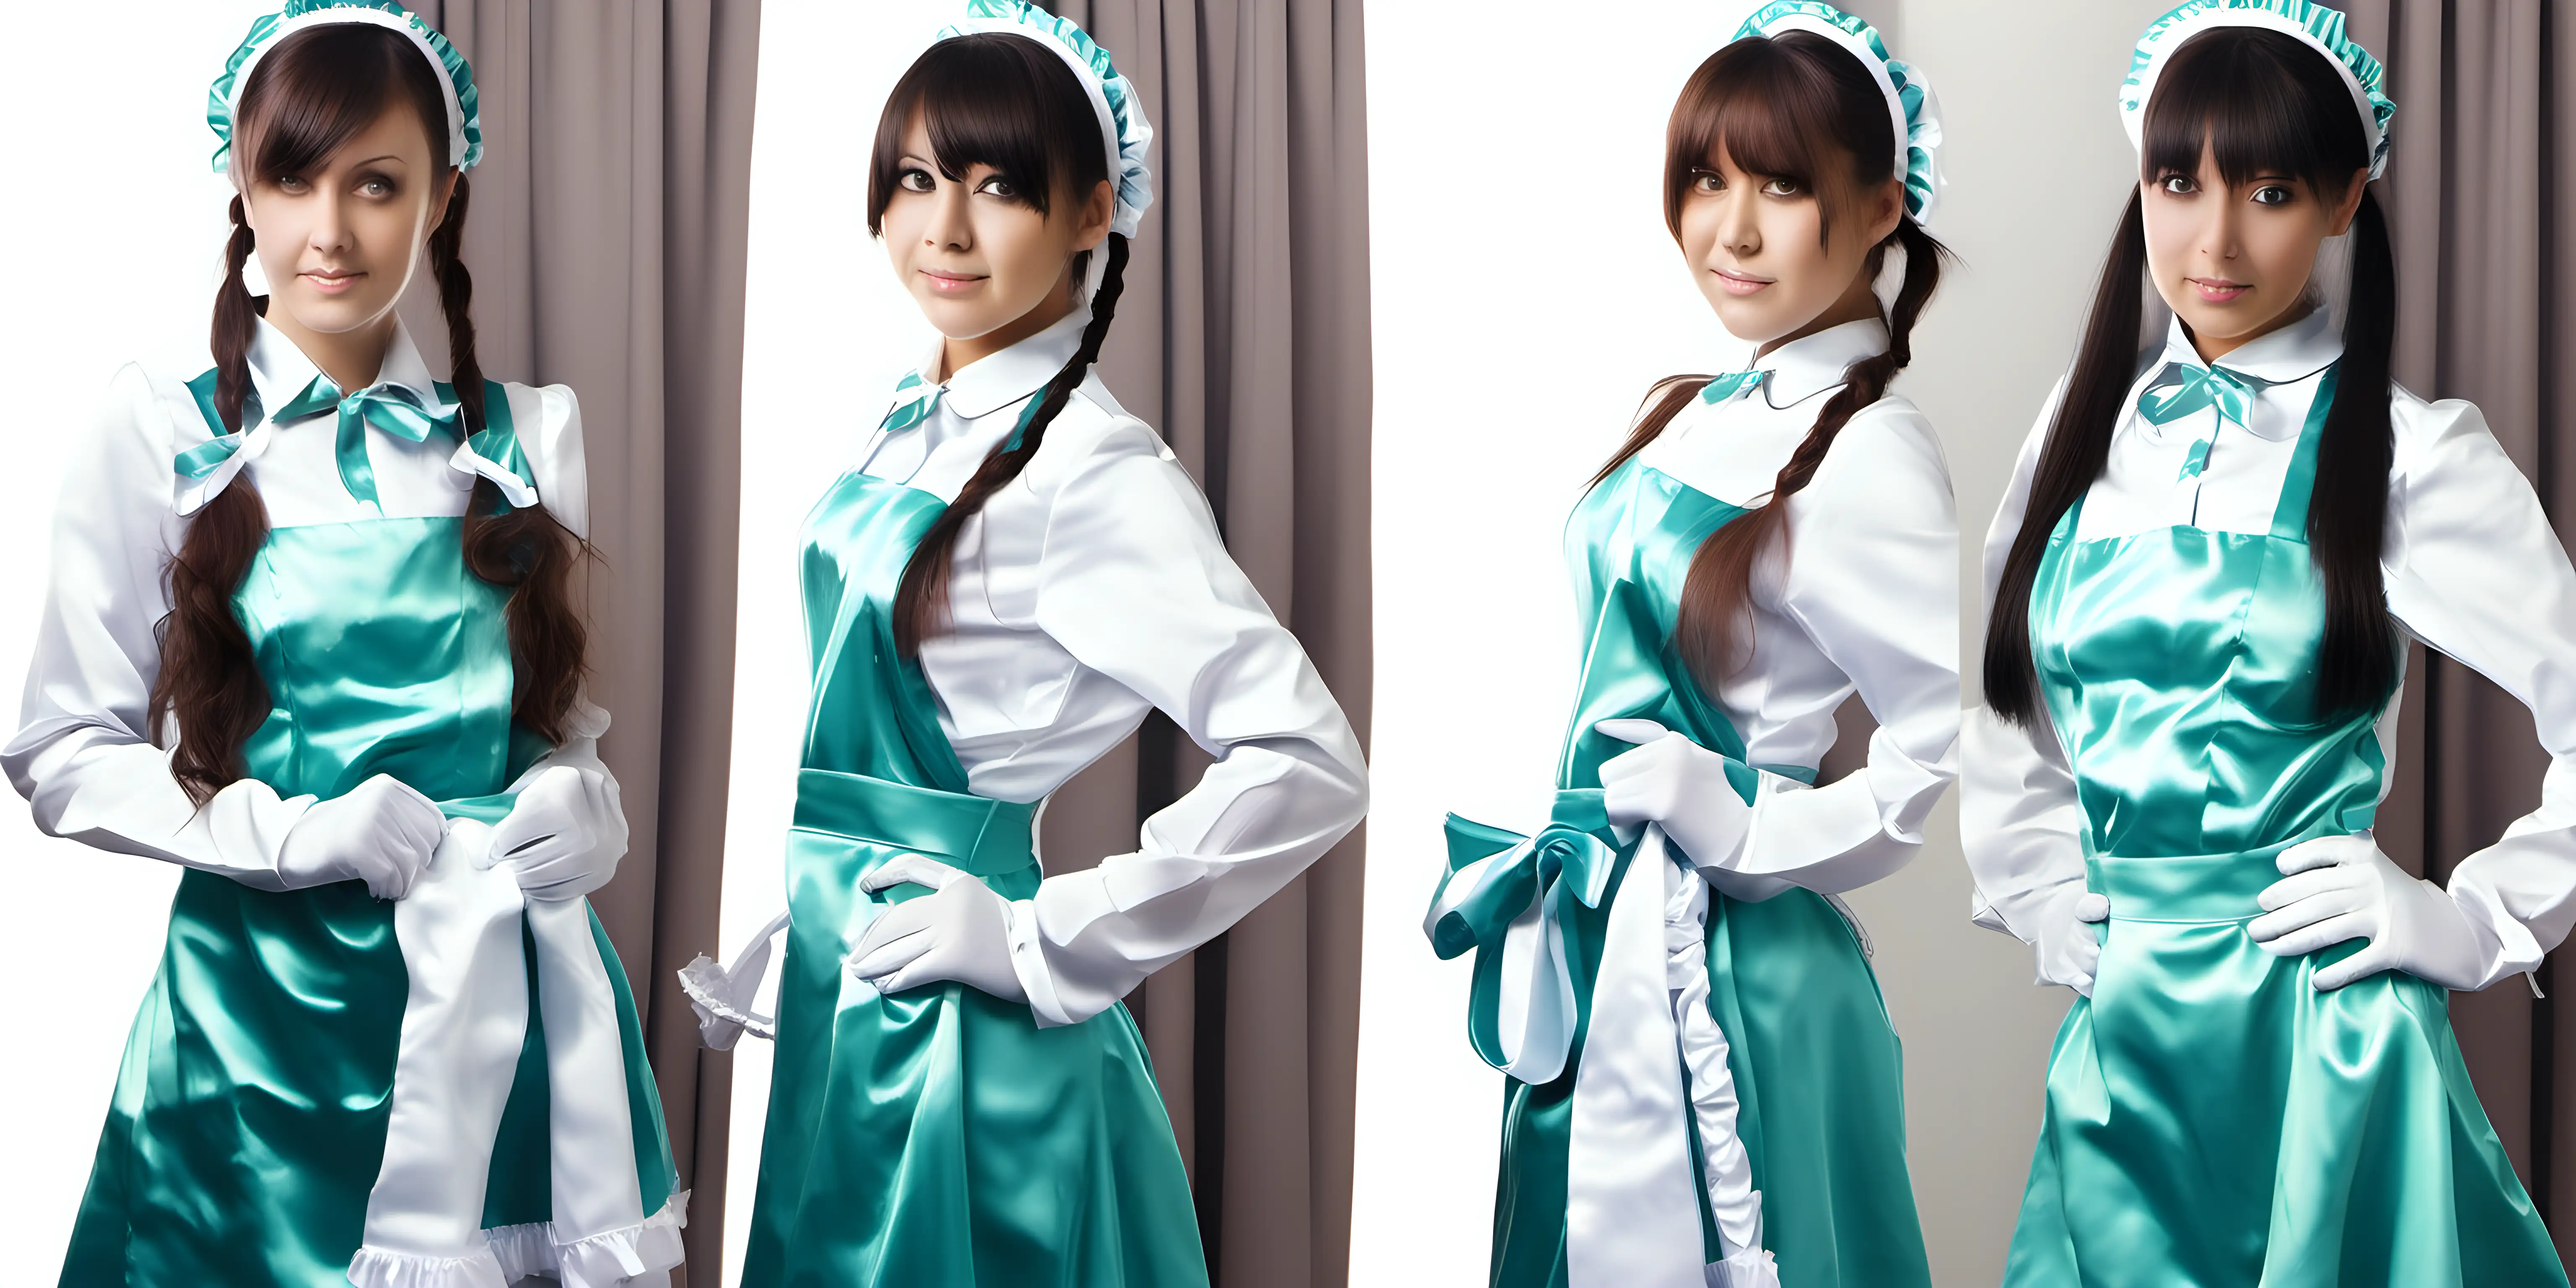 Elegant Maid Uniforms Graceful Girls in Satin Finery